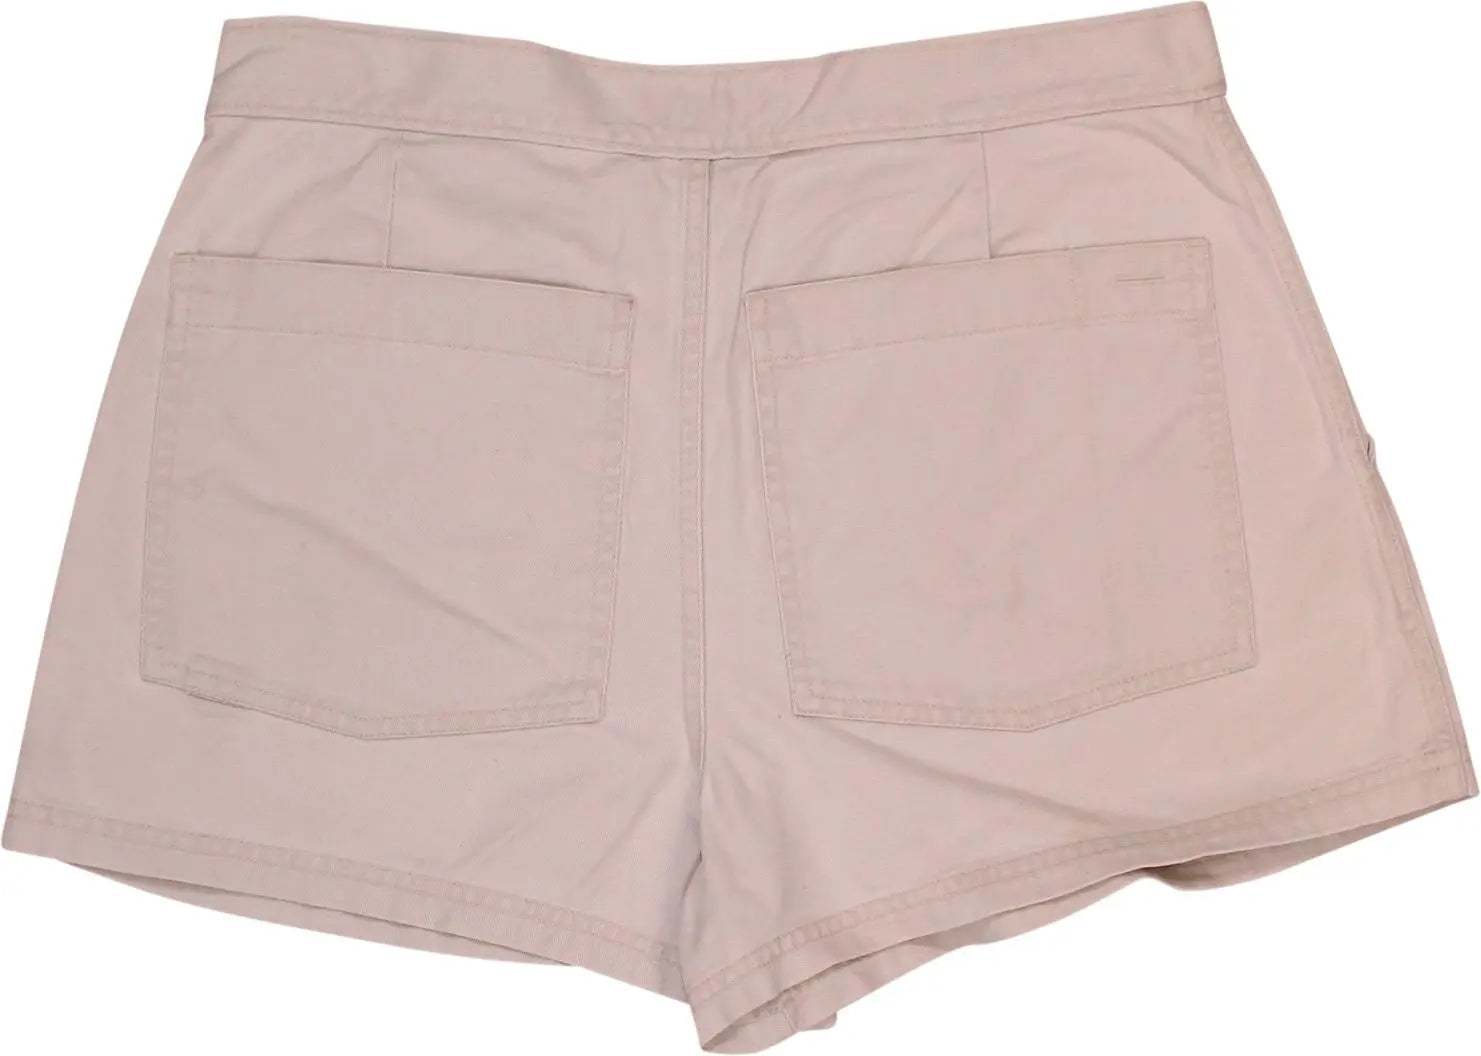 Ralph Lauren - Shorts by Ralph Lauren- ThriftTale.com - Vintage and second handclothing